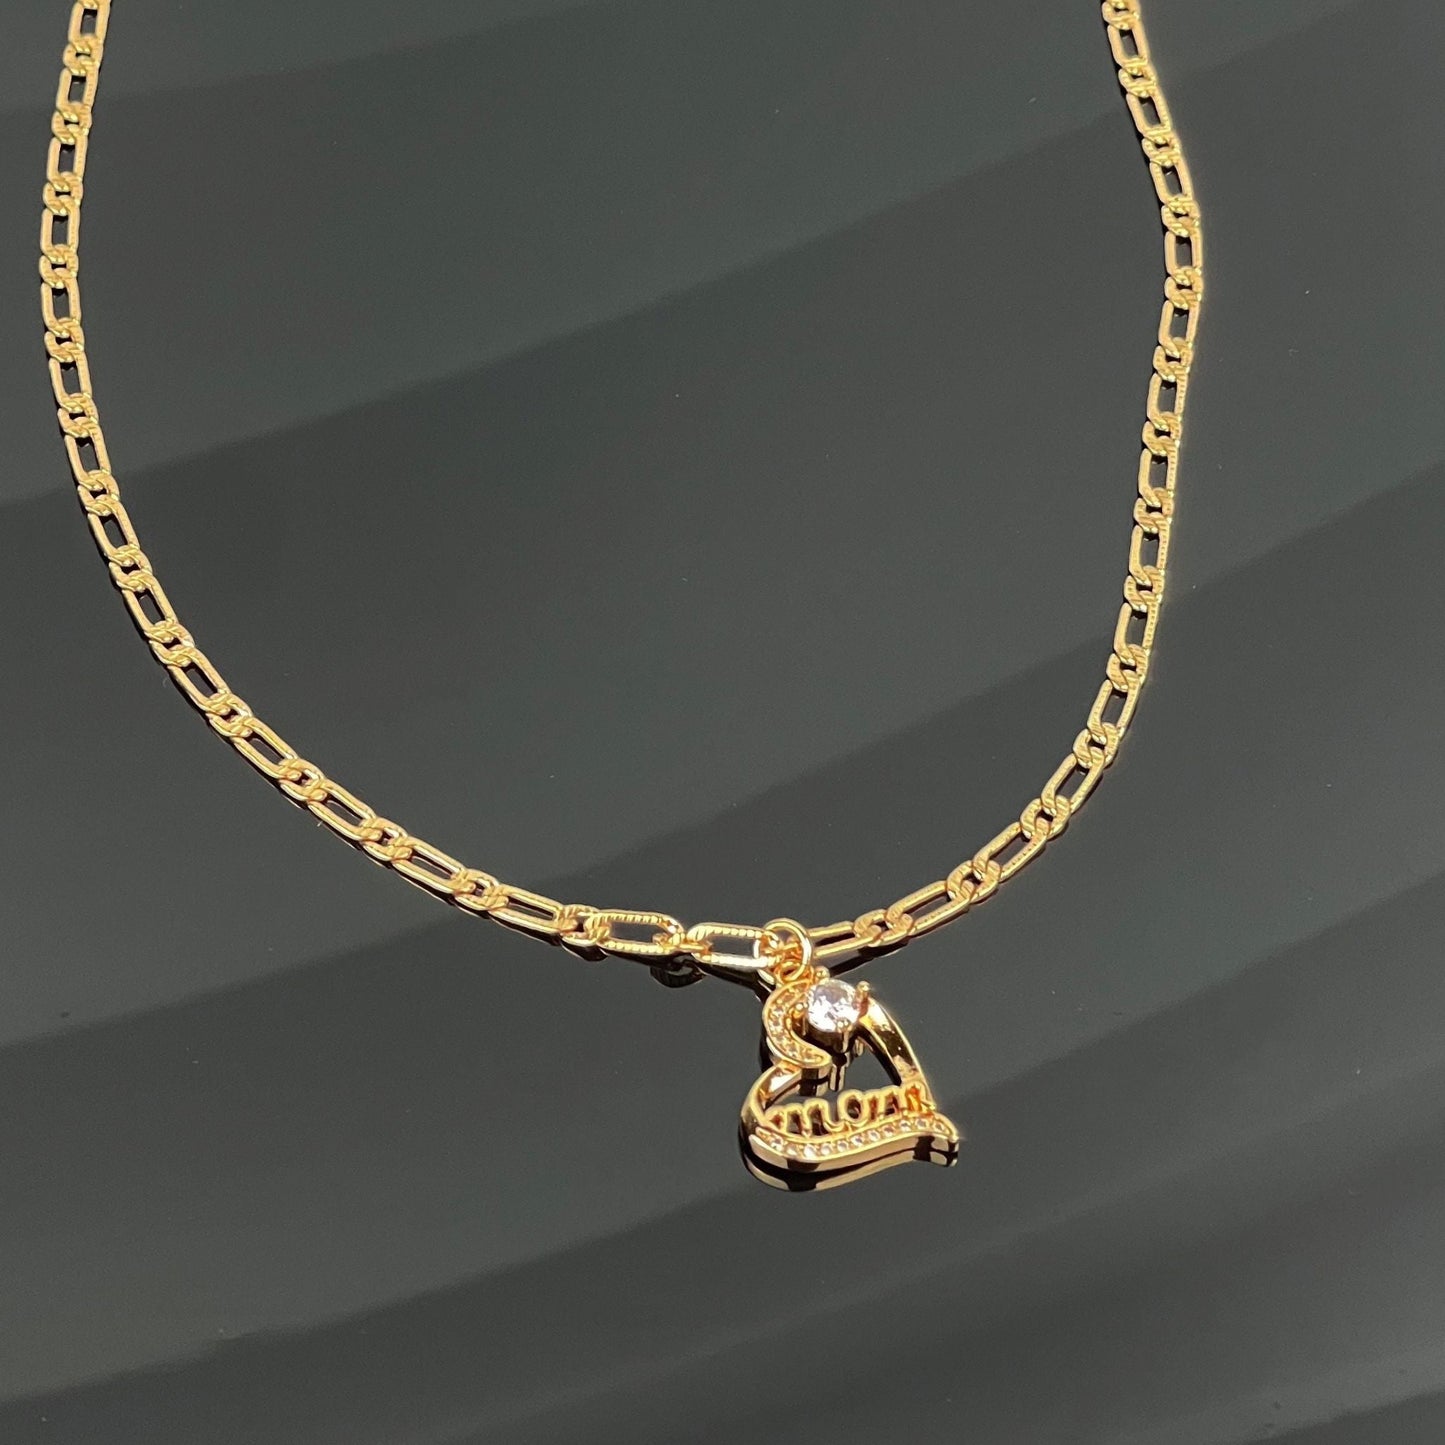 Gold Heart Necklace-Mom Necklace-CZ Necklace-Carabella By Cheryl